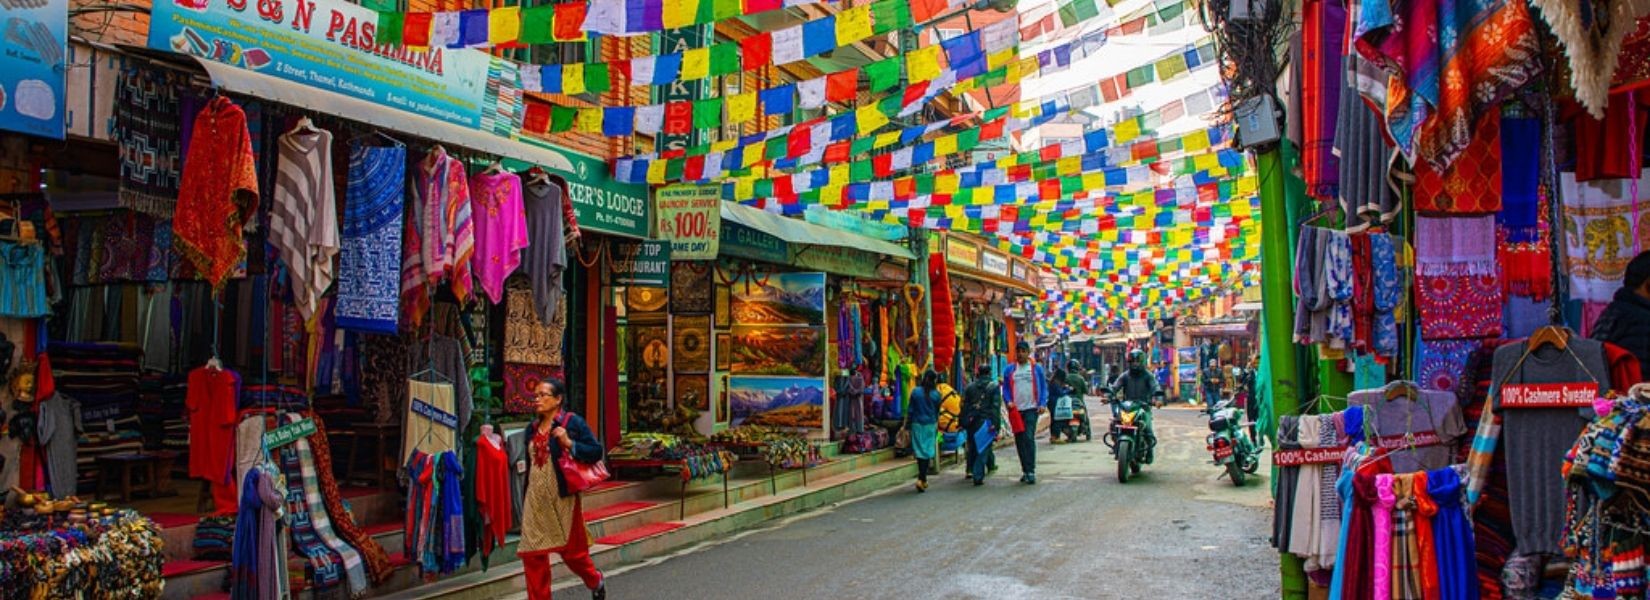 Thamel: Touristic Destination for Nightlife in Kathmandu